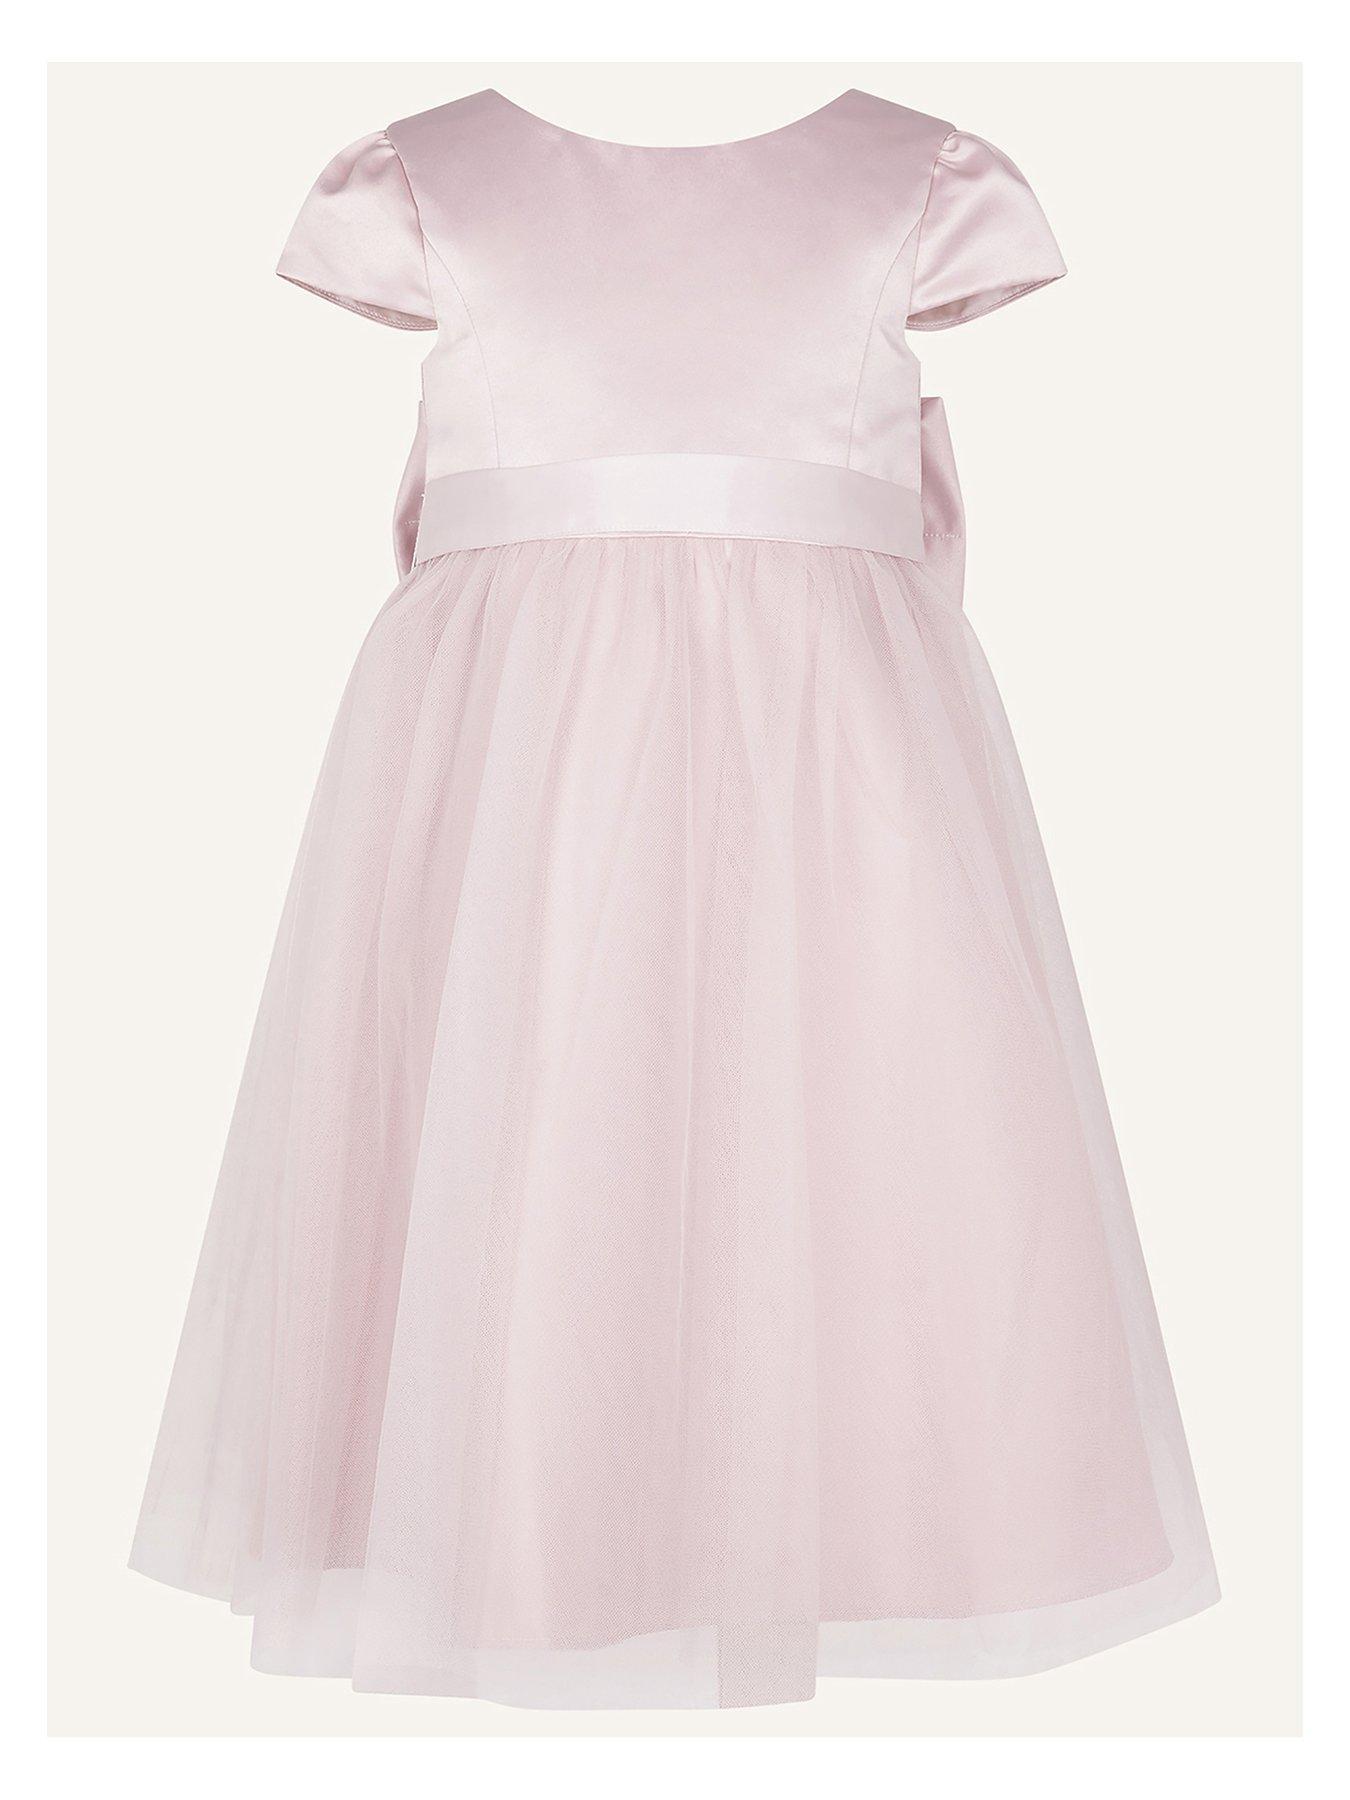  Girls Tulle Bridesmaid Dress - Pink